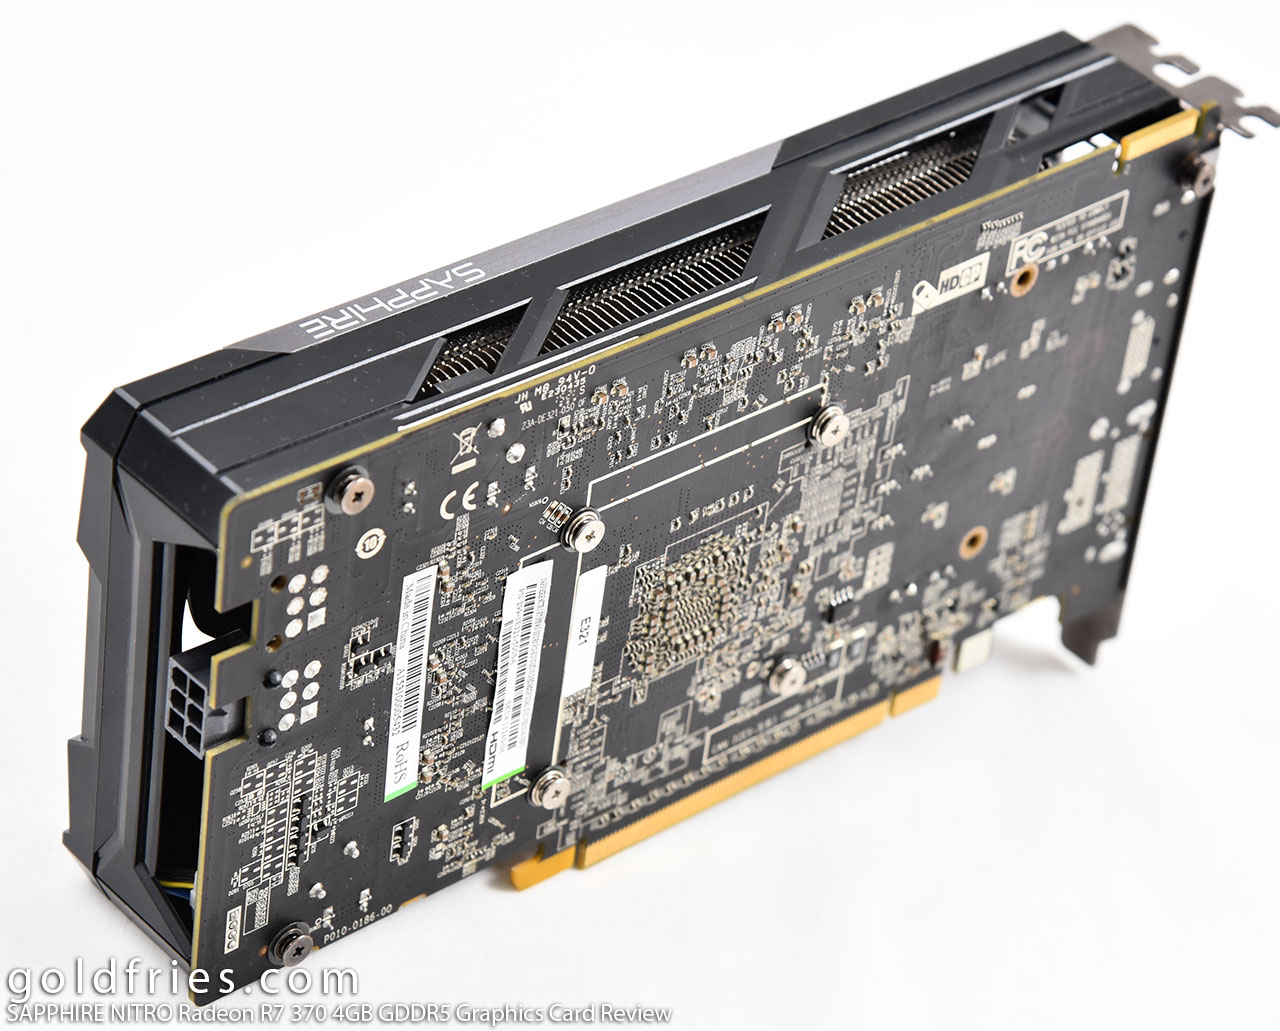 SAPPHIRE NITRO Radeon R7 370 4GB GDDR5 Graphics Card Review